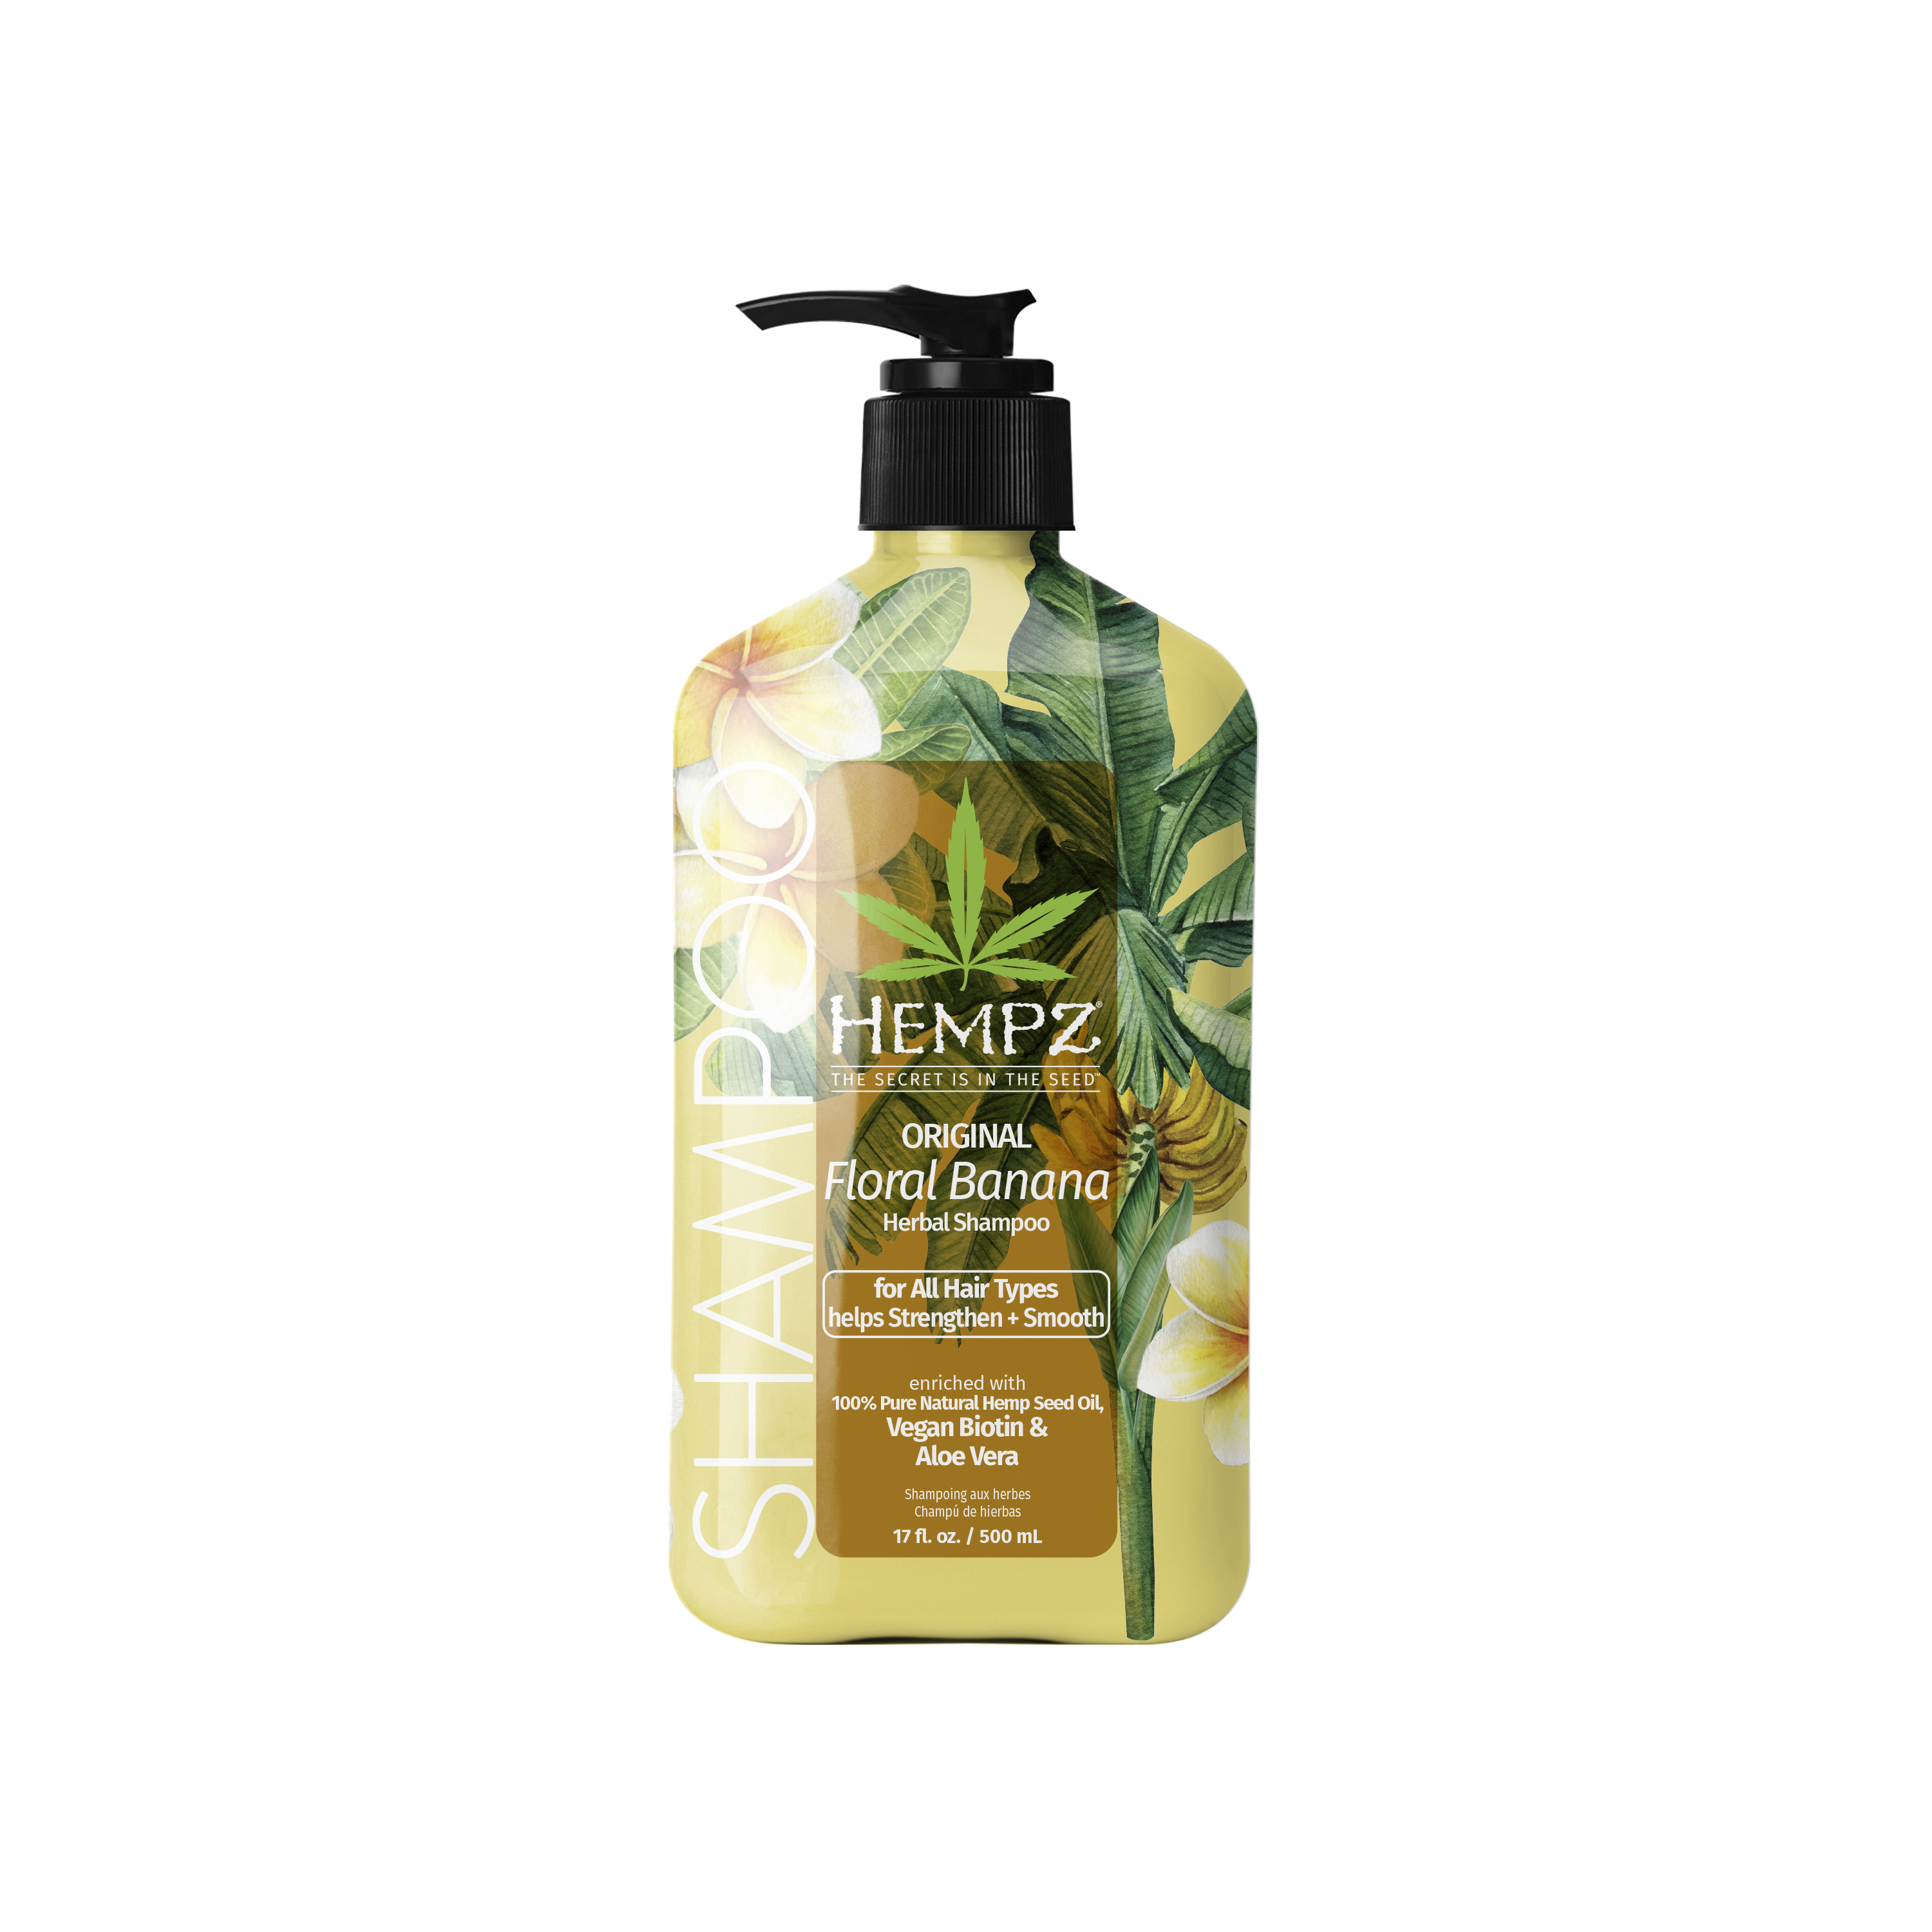 Hempz Original Floral Banana Herbal Shampoo - Creata Beauty - Professional Beauty Products